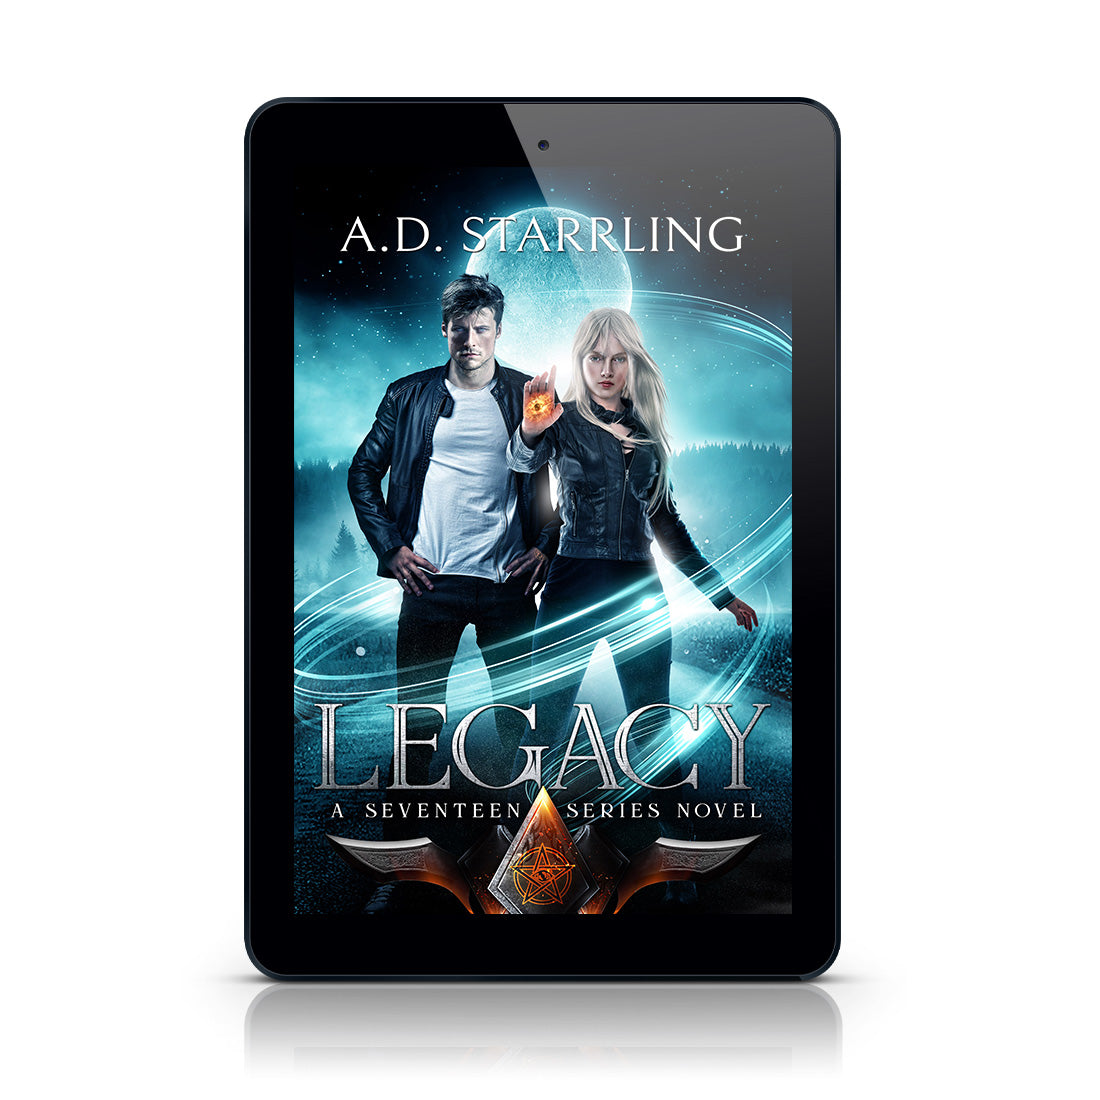 Legacy (Seventeen Series Book 4) EBOOK supernatural thriller urban fantasy author ad starrling